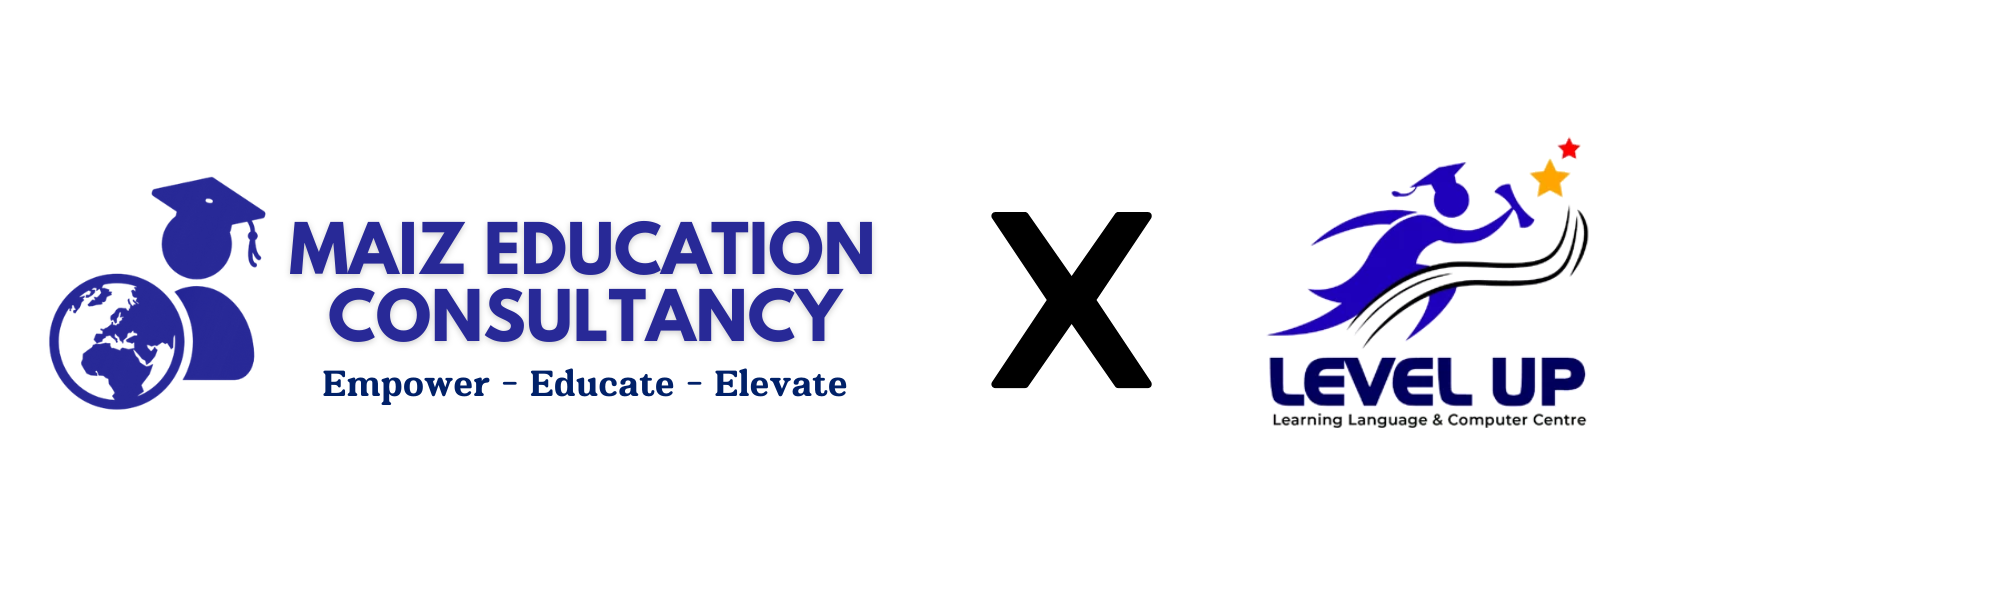 October Education Consultancy Logo Concept by Samirjay Art on Dribbble